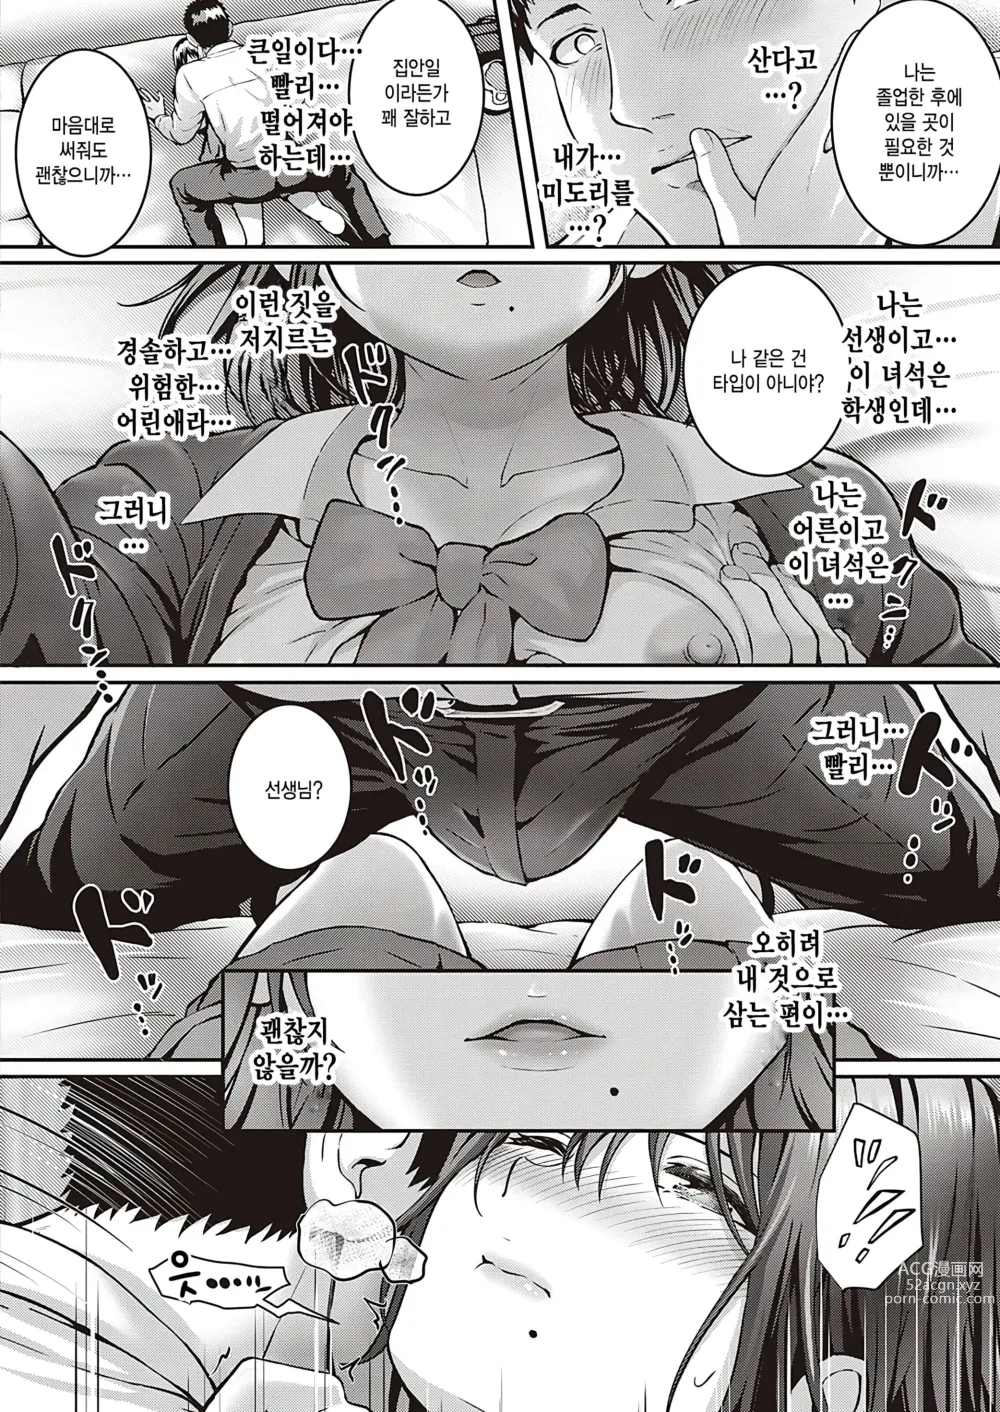 Page 8 of manga Bad apple...?